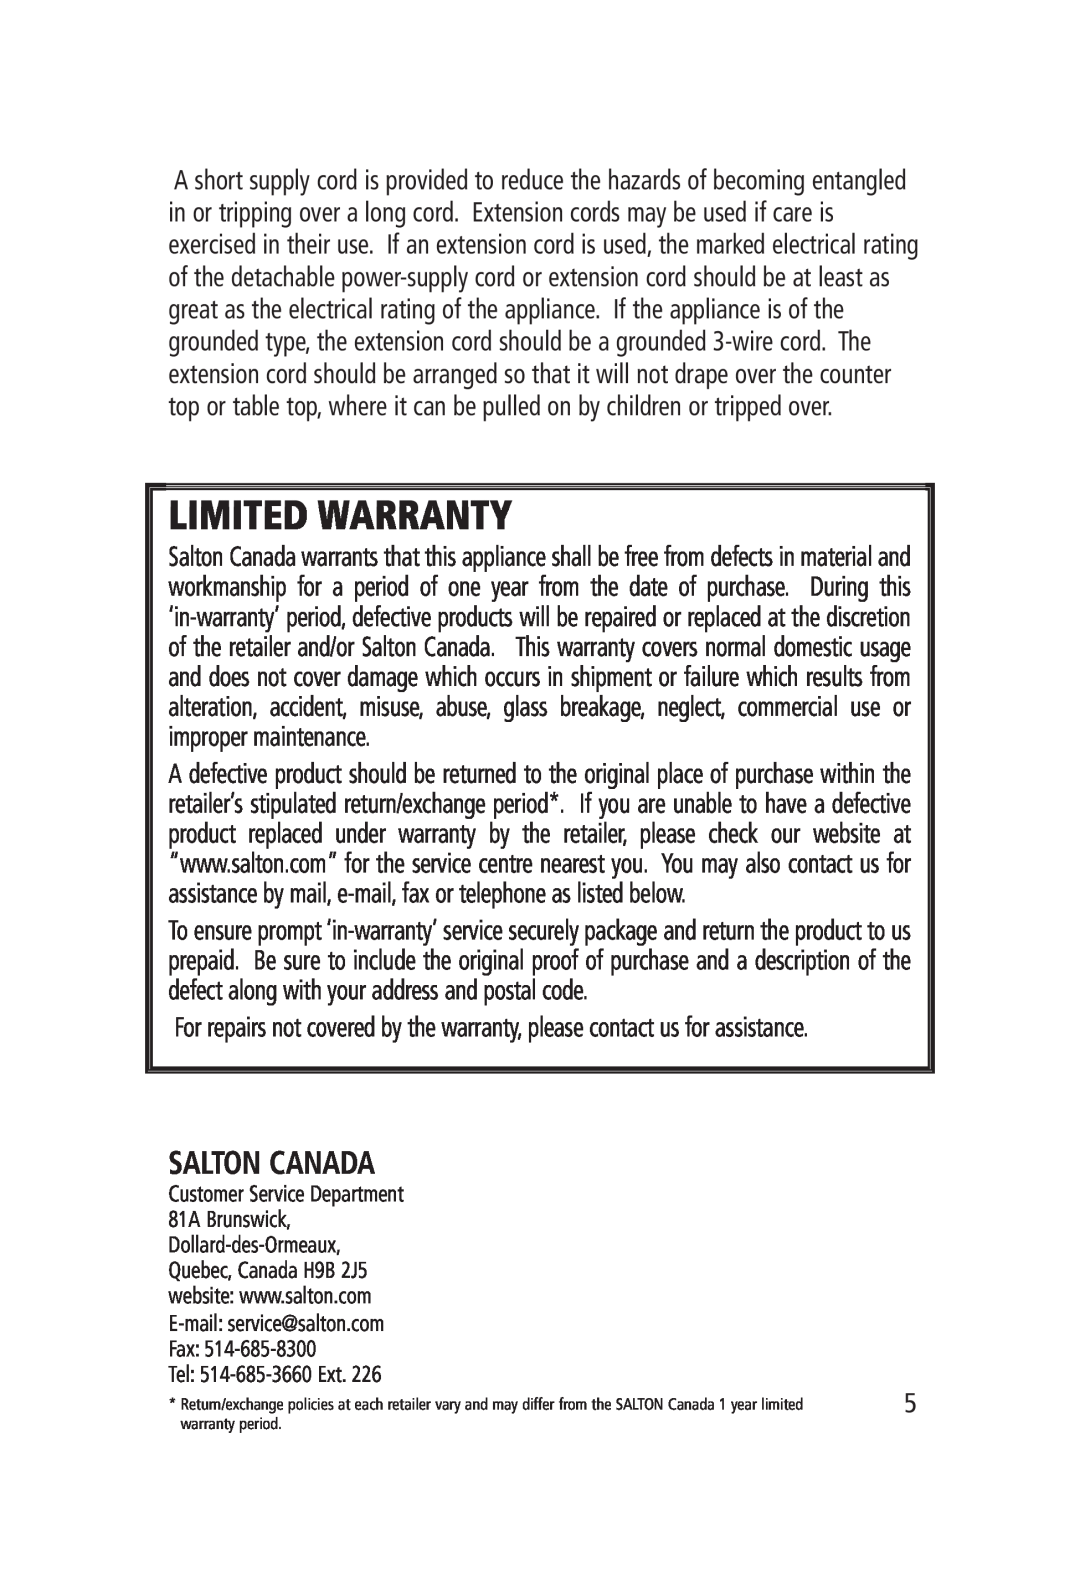 Salton GK-1202 manual Salton Canada, Limited Warranty 